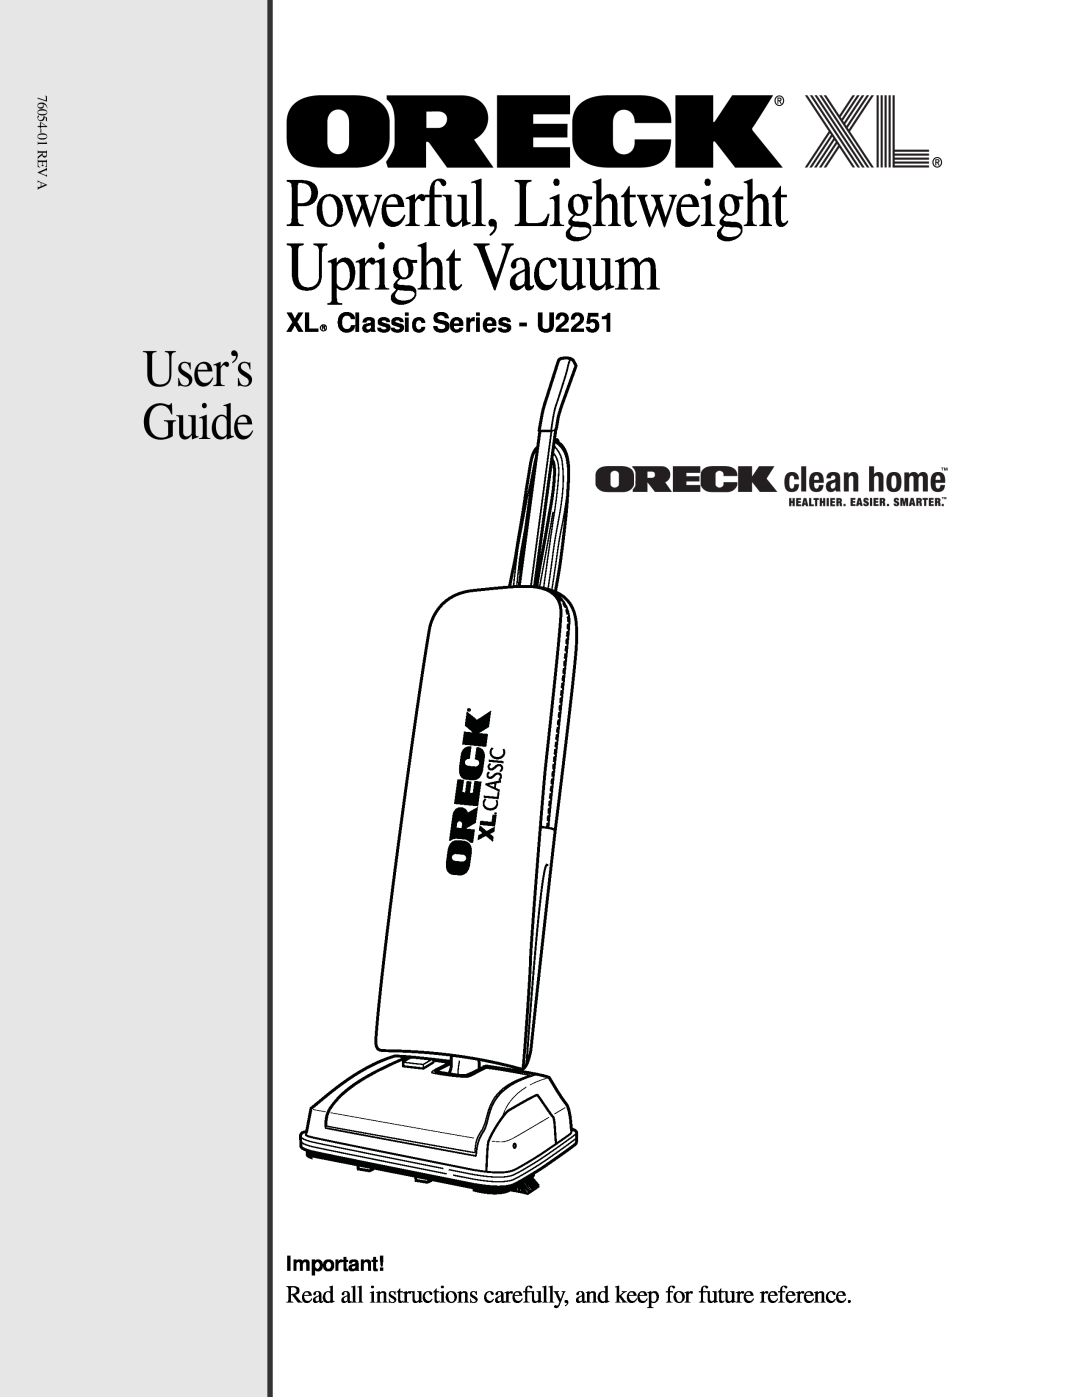 Oreck manual Powerful, Lightweight Upright Vacuum, User’s Guide, XL Classic Series - U2251 